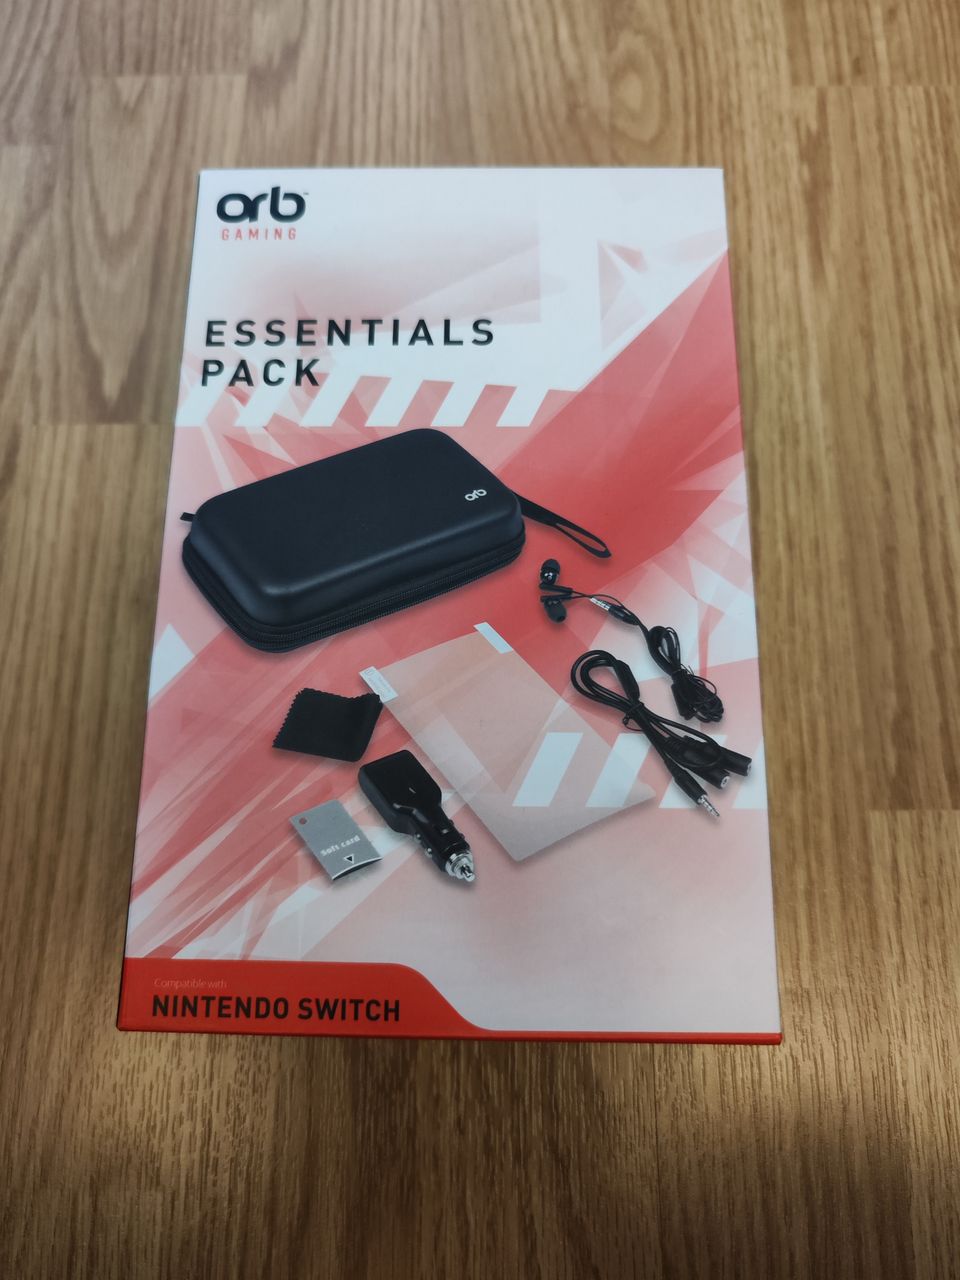 Uusi Nintendo Switch tarvikesarja, ORB Gaming